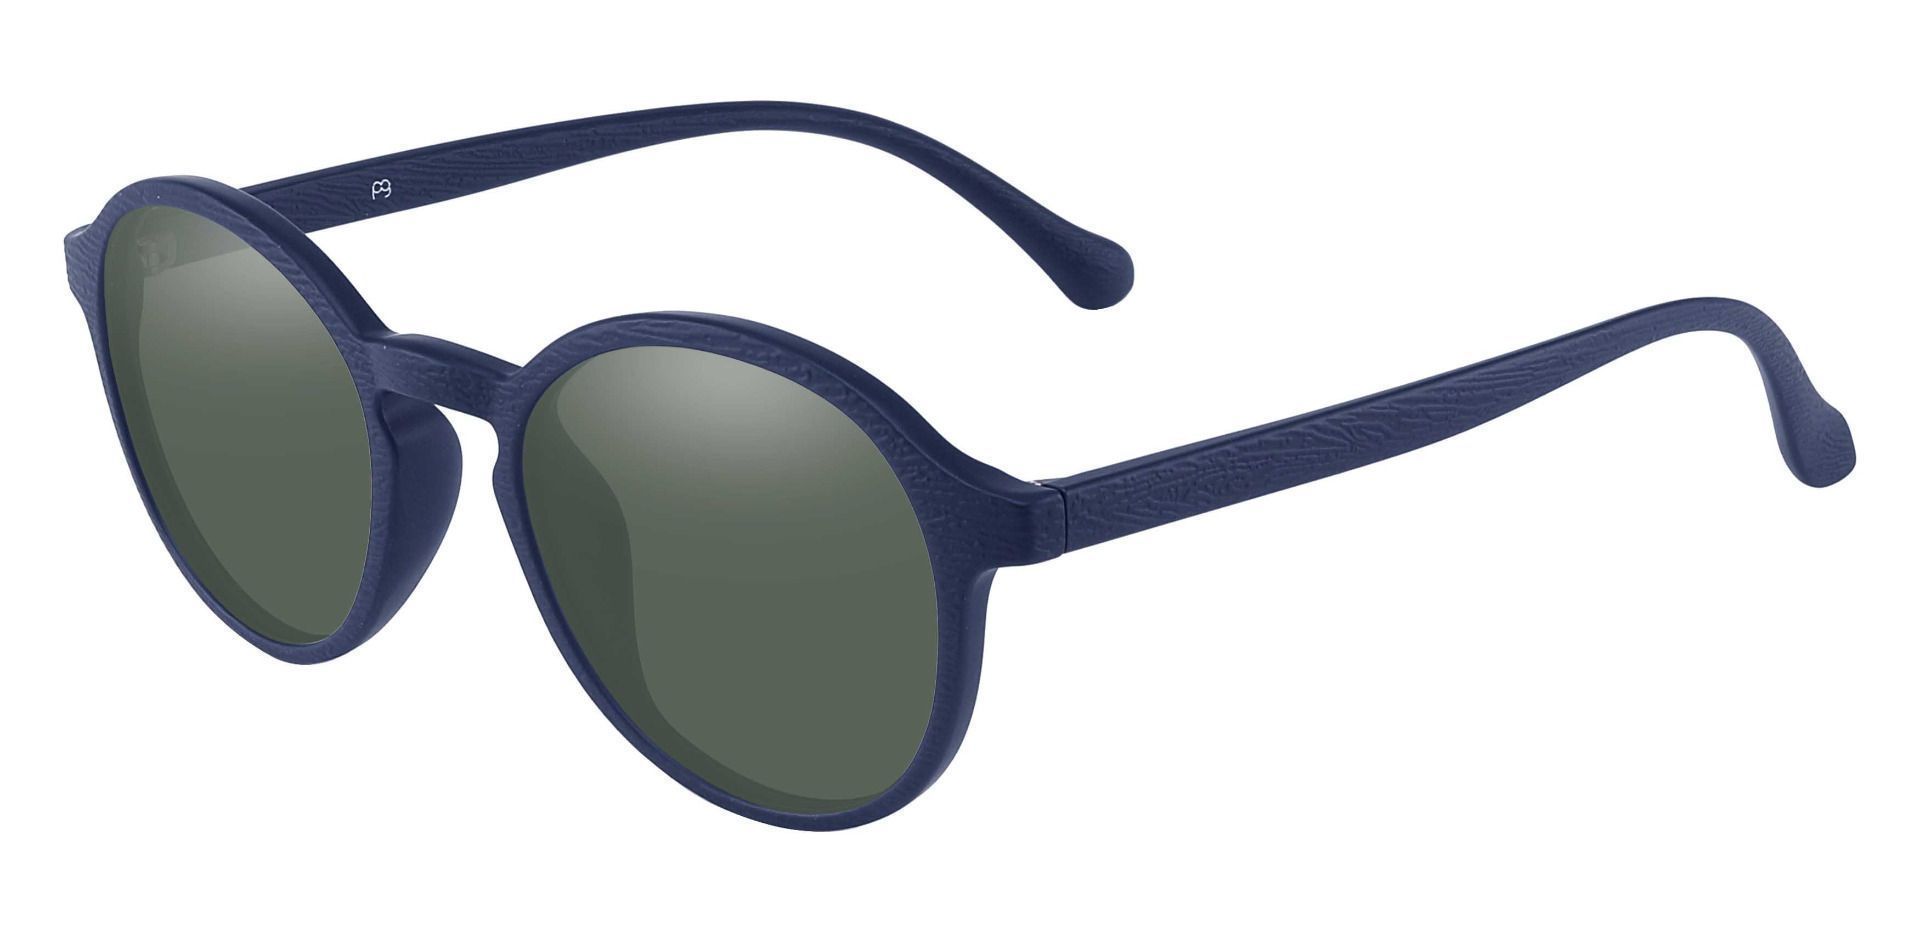 Whitney Round Reading Sunglasses - Blue Frame With Green Lenses